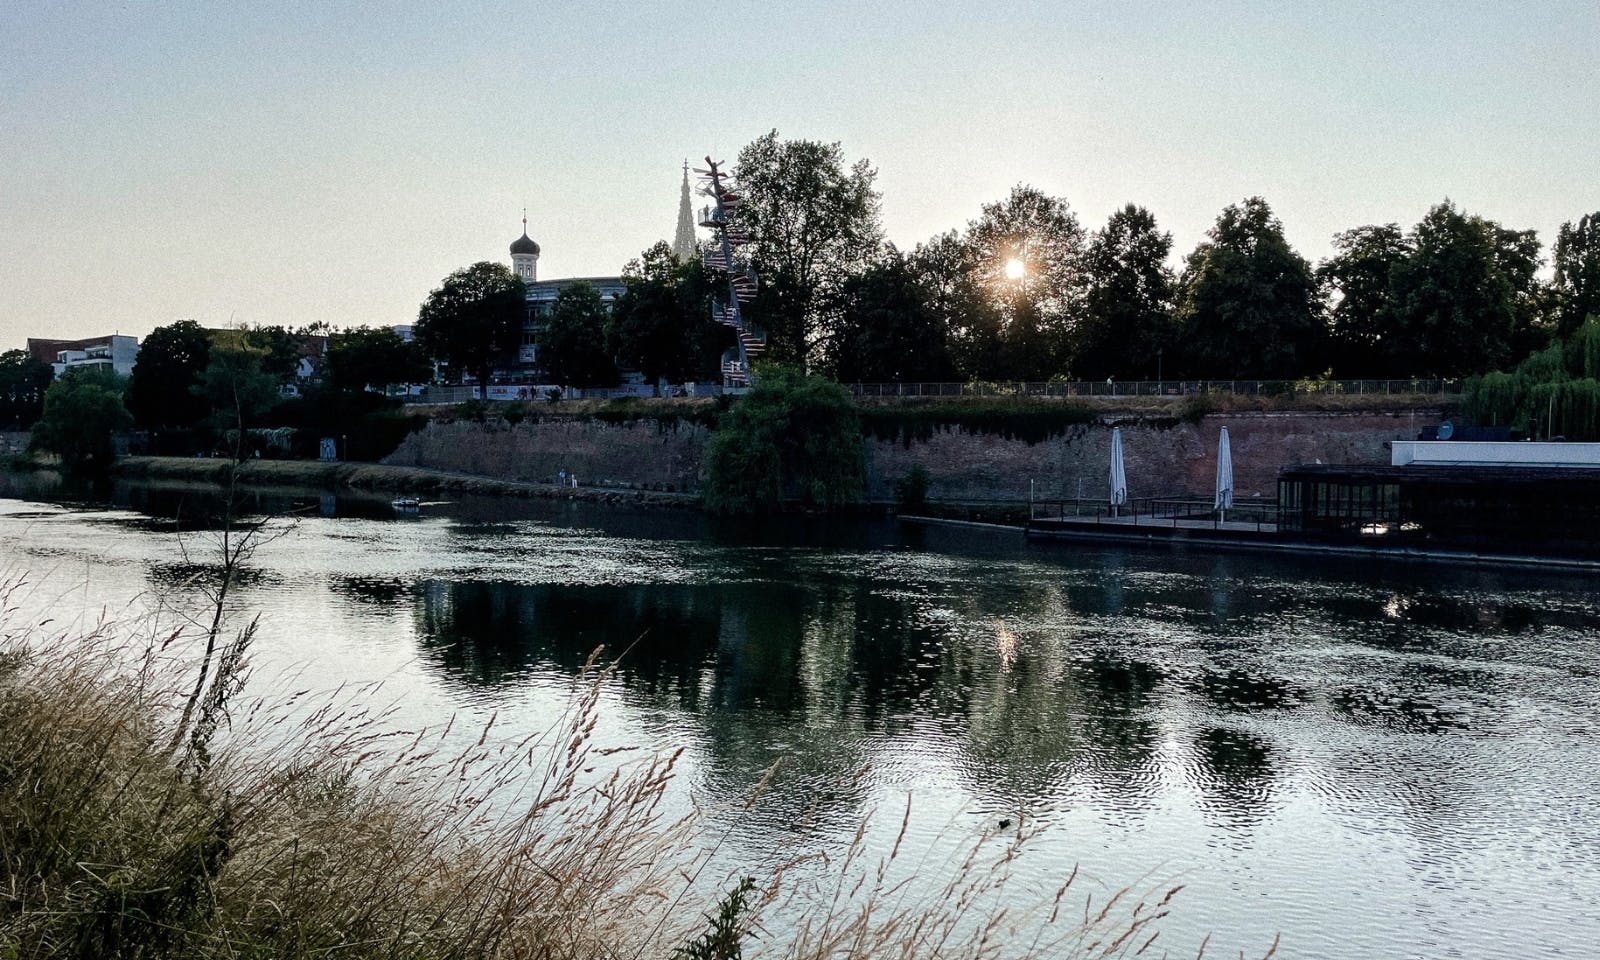 Donauufer